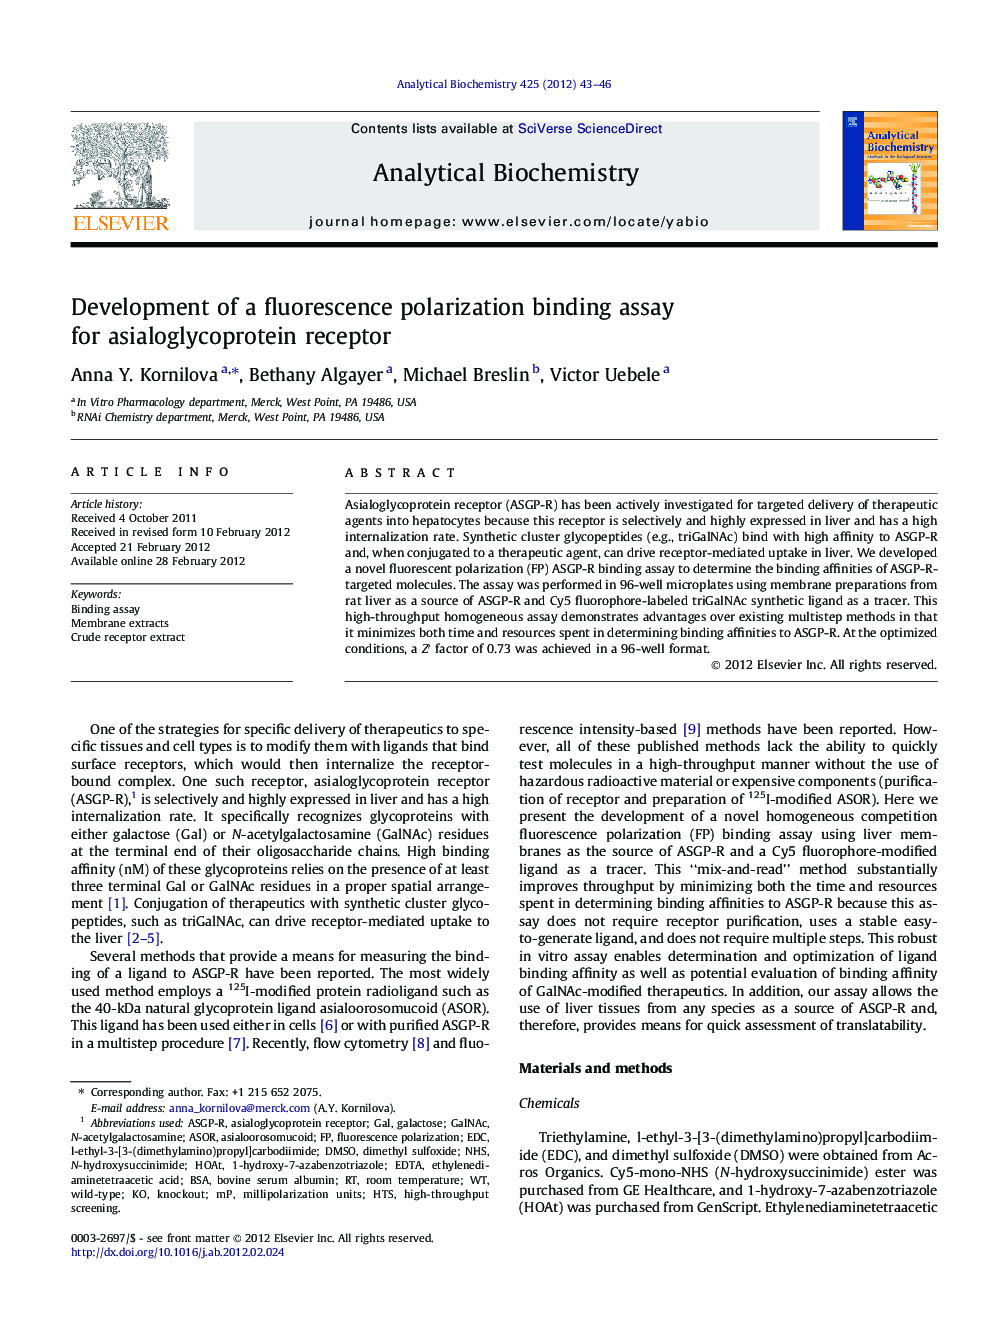 Development of a fluorescence polarization binding assay for asialoglycoprotein receptor